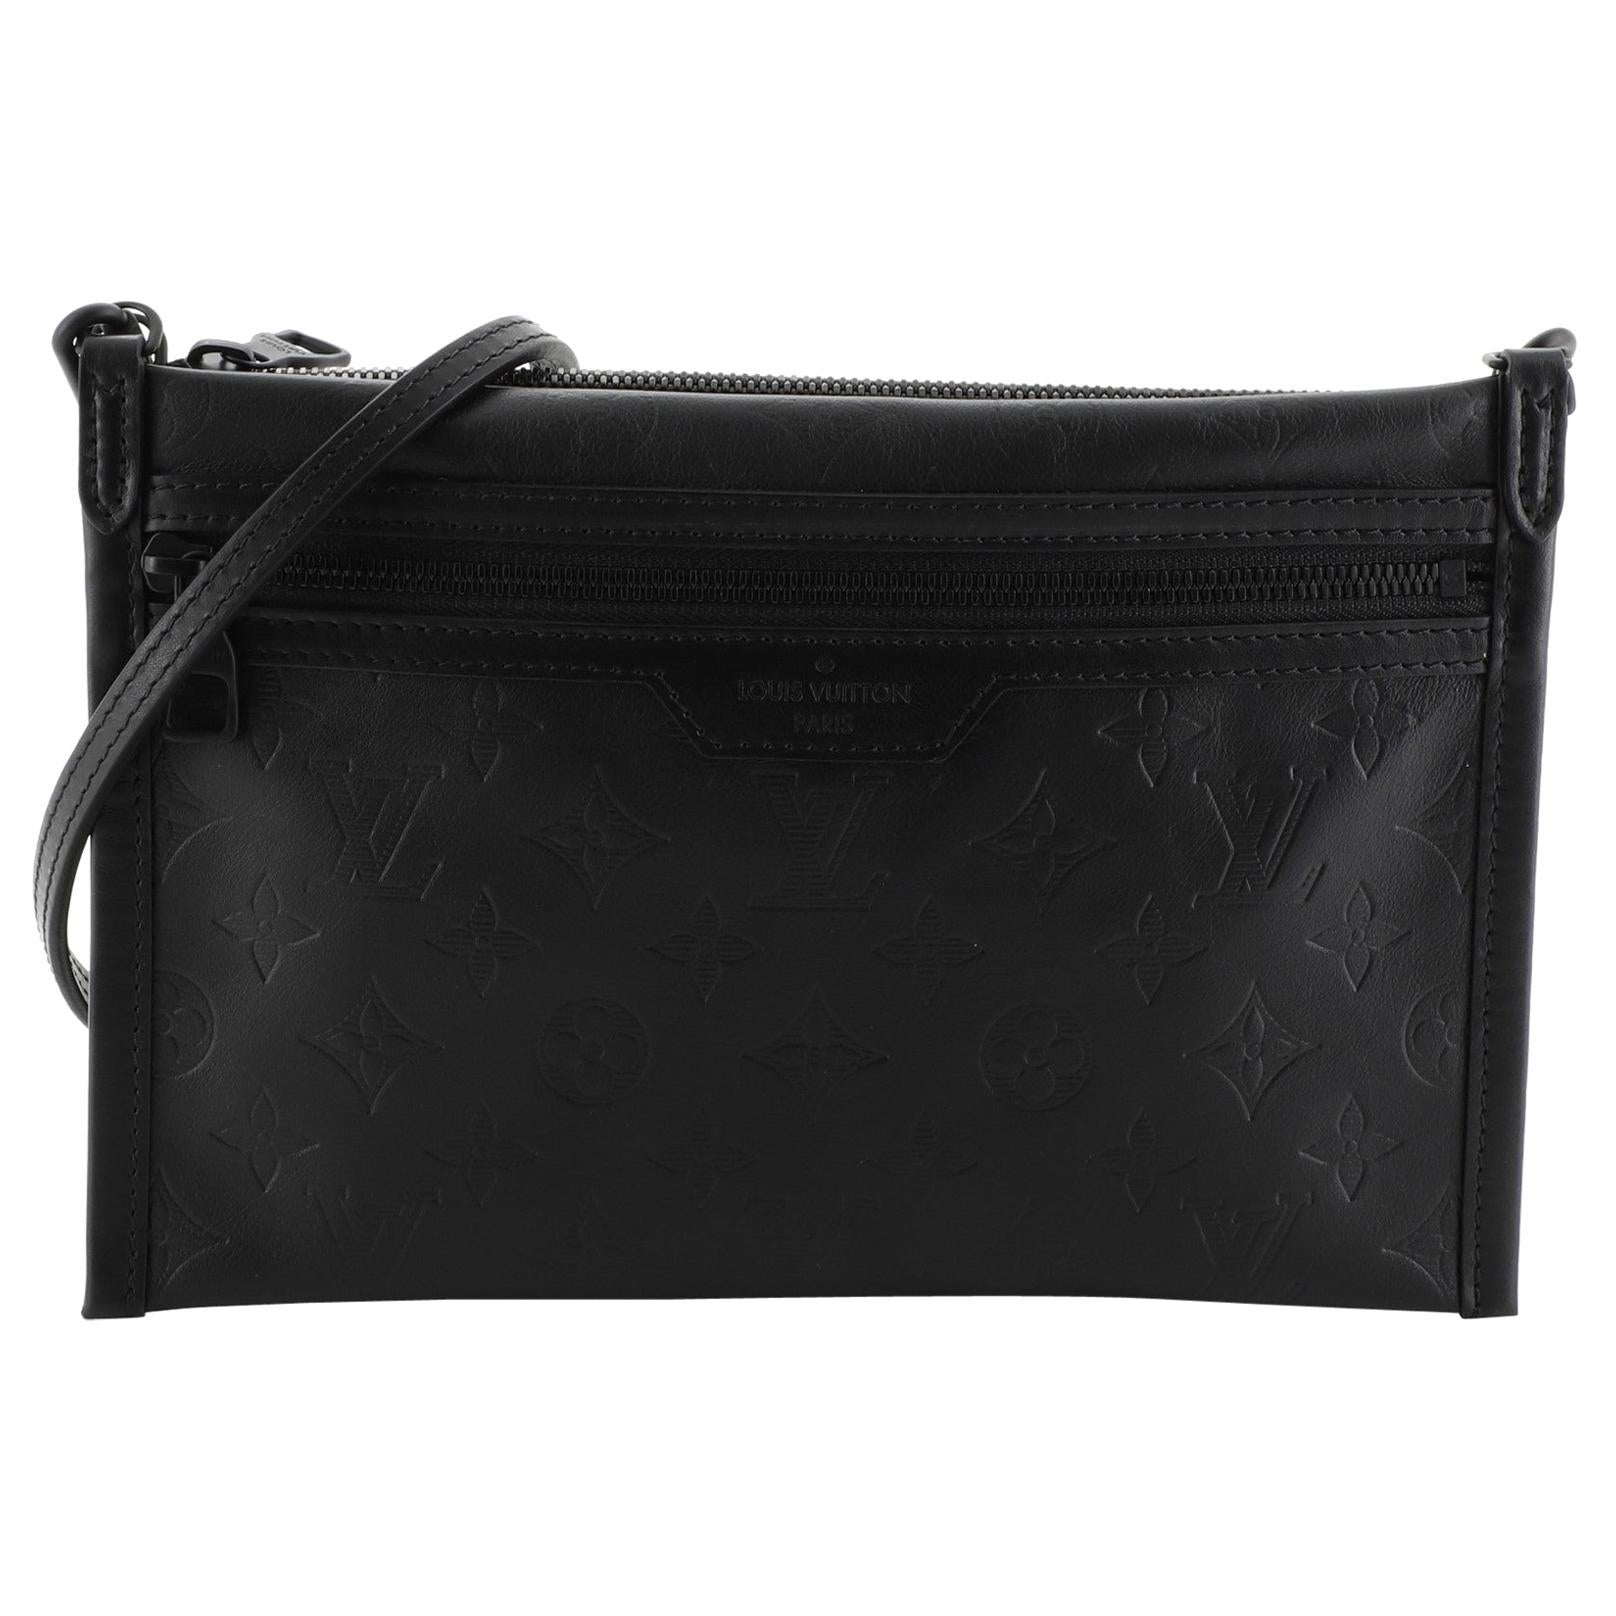 Louis Vuitton Speedy Bandouliere Bag Monogram Shadow Leather 40 Black